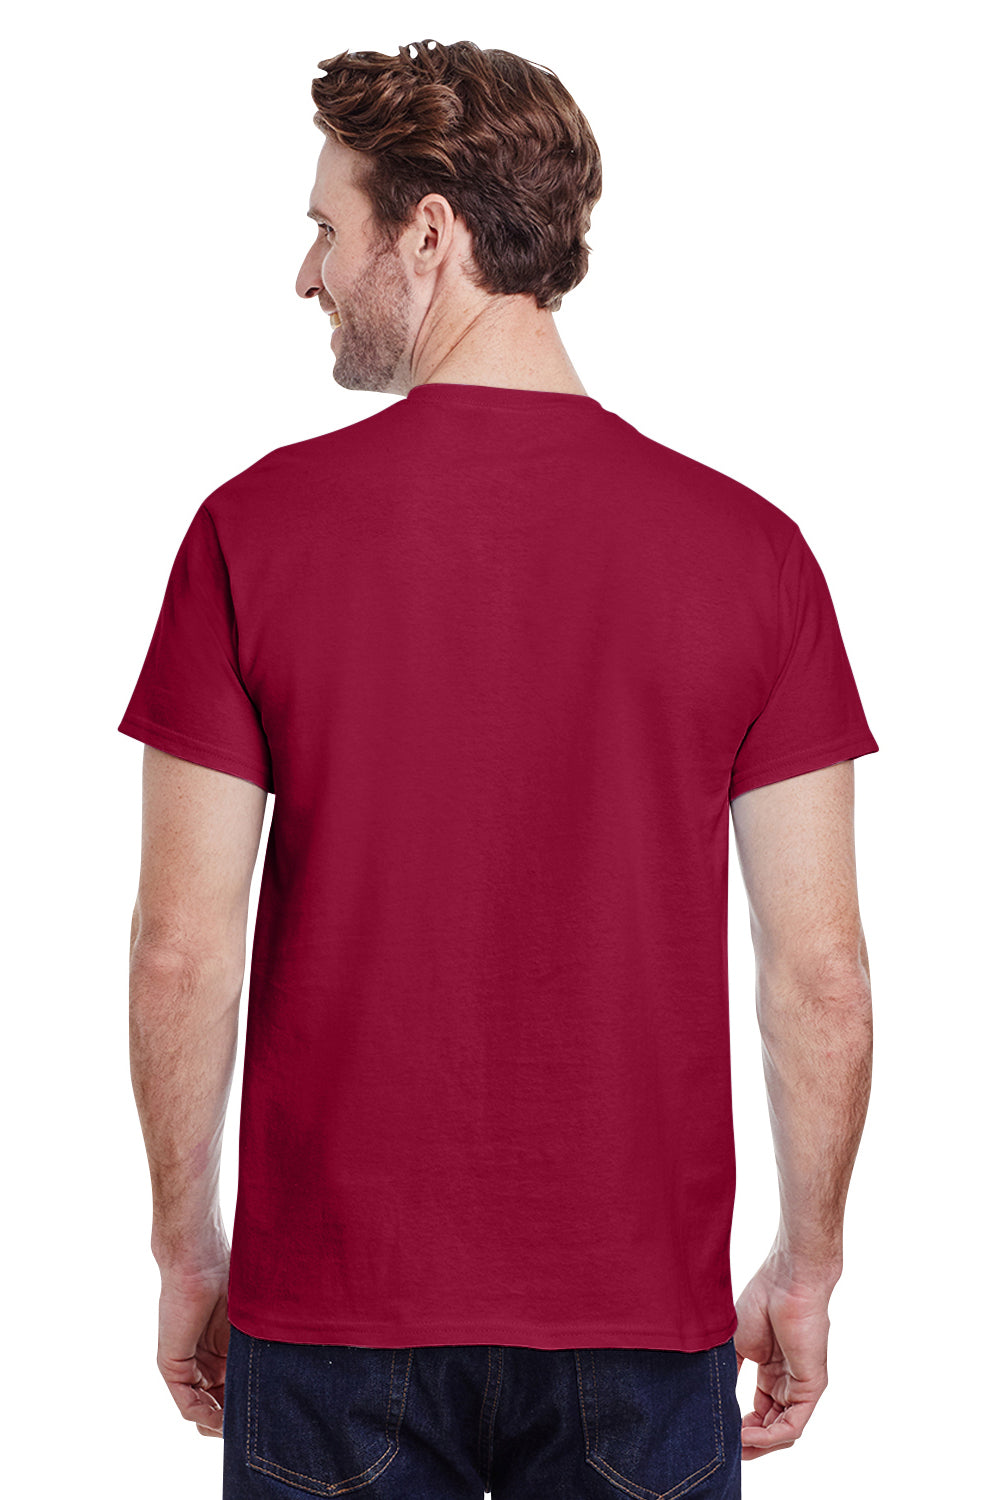 Gildan G200 Mens Ultra Short Sleeve Crewneck T-Shirt Cardinal Red Back